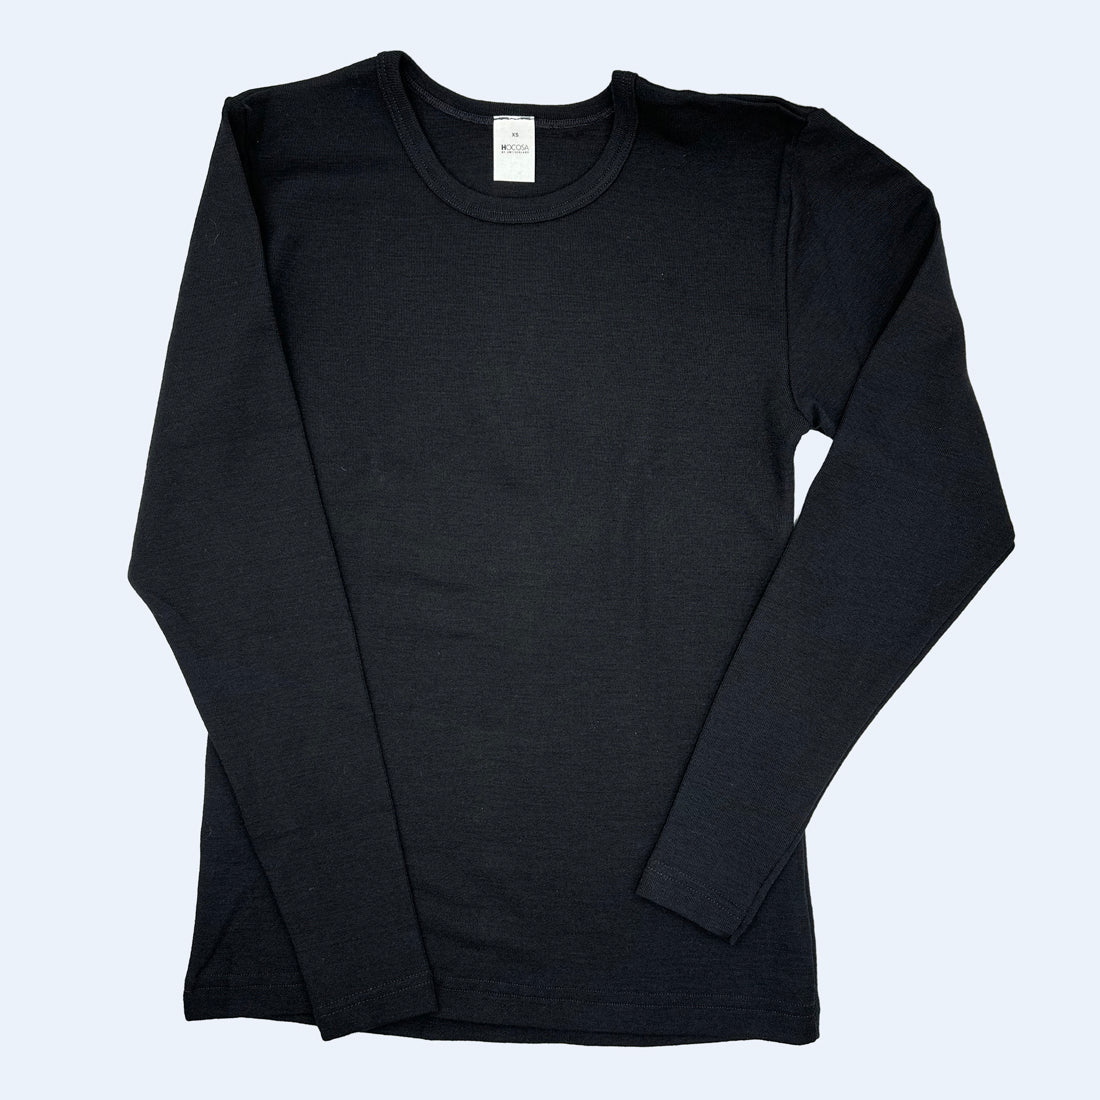 HOCOSA "Sport" Organic Merino Wool Long-Sleeve Undershirt for Men or Women, Round-neck, in Black or Red